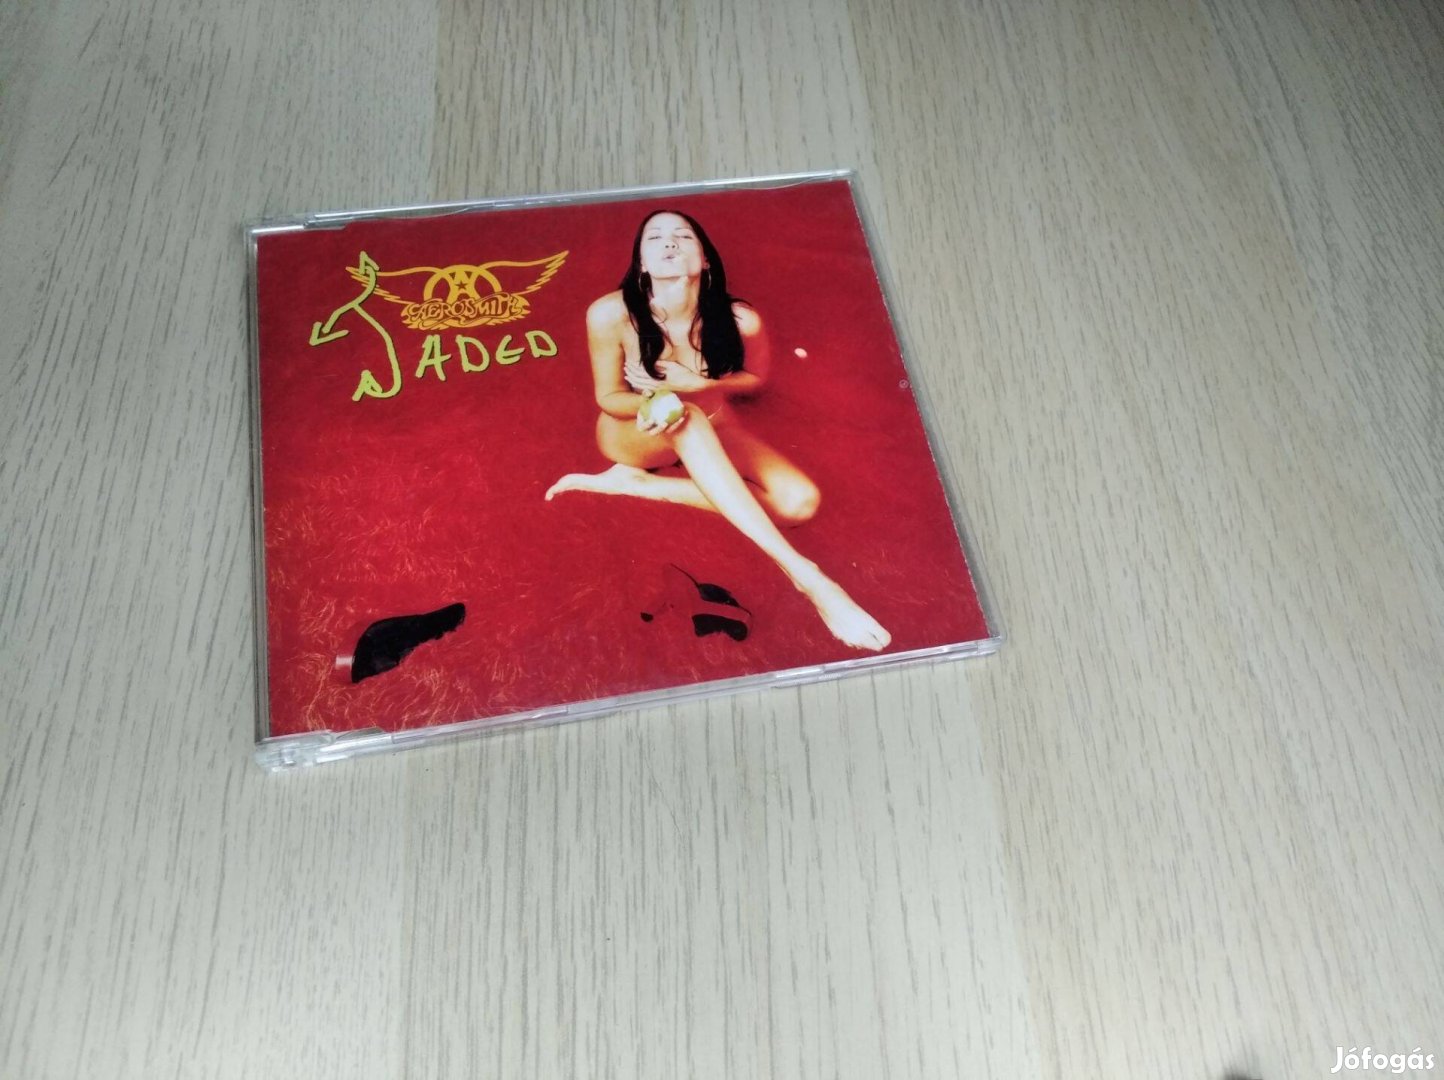 Aerosmith - Jaded / Single CD